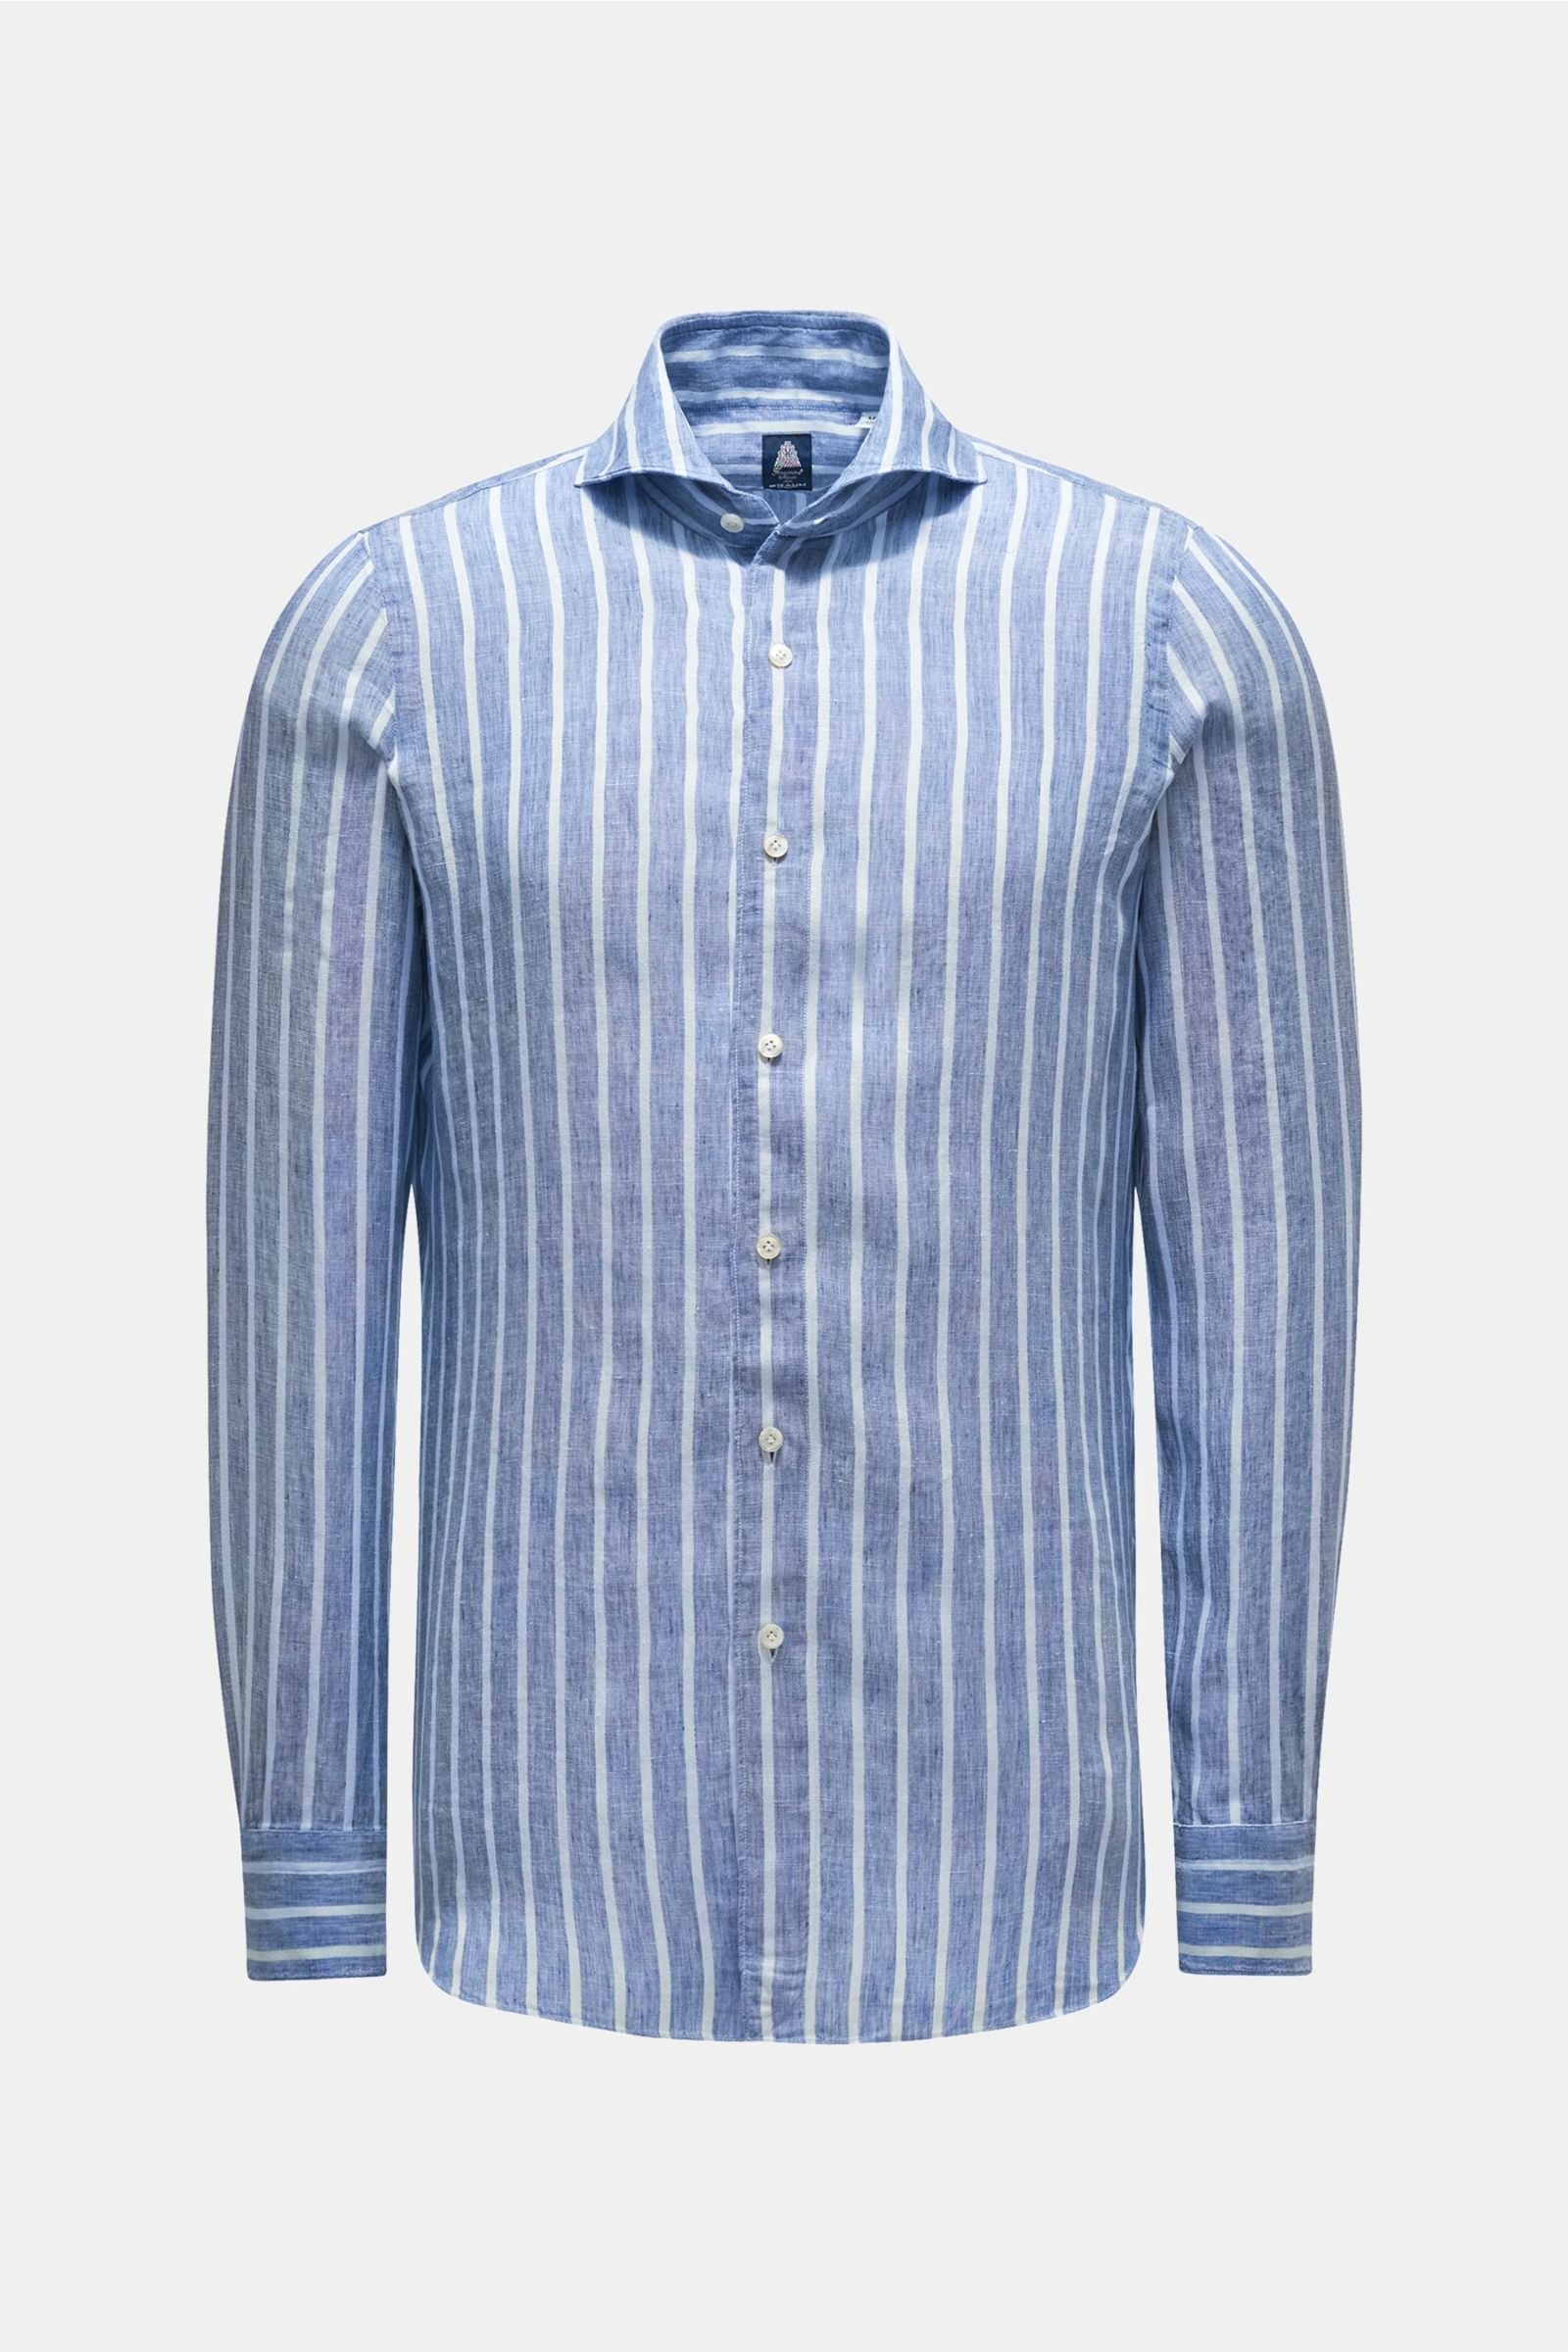 Linen shirt 'Sergio Interno' shark collar grey-blue/pastel blue striped